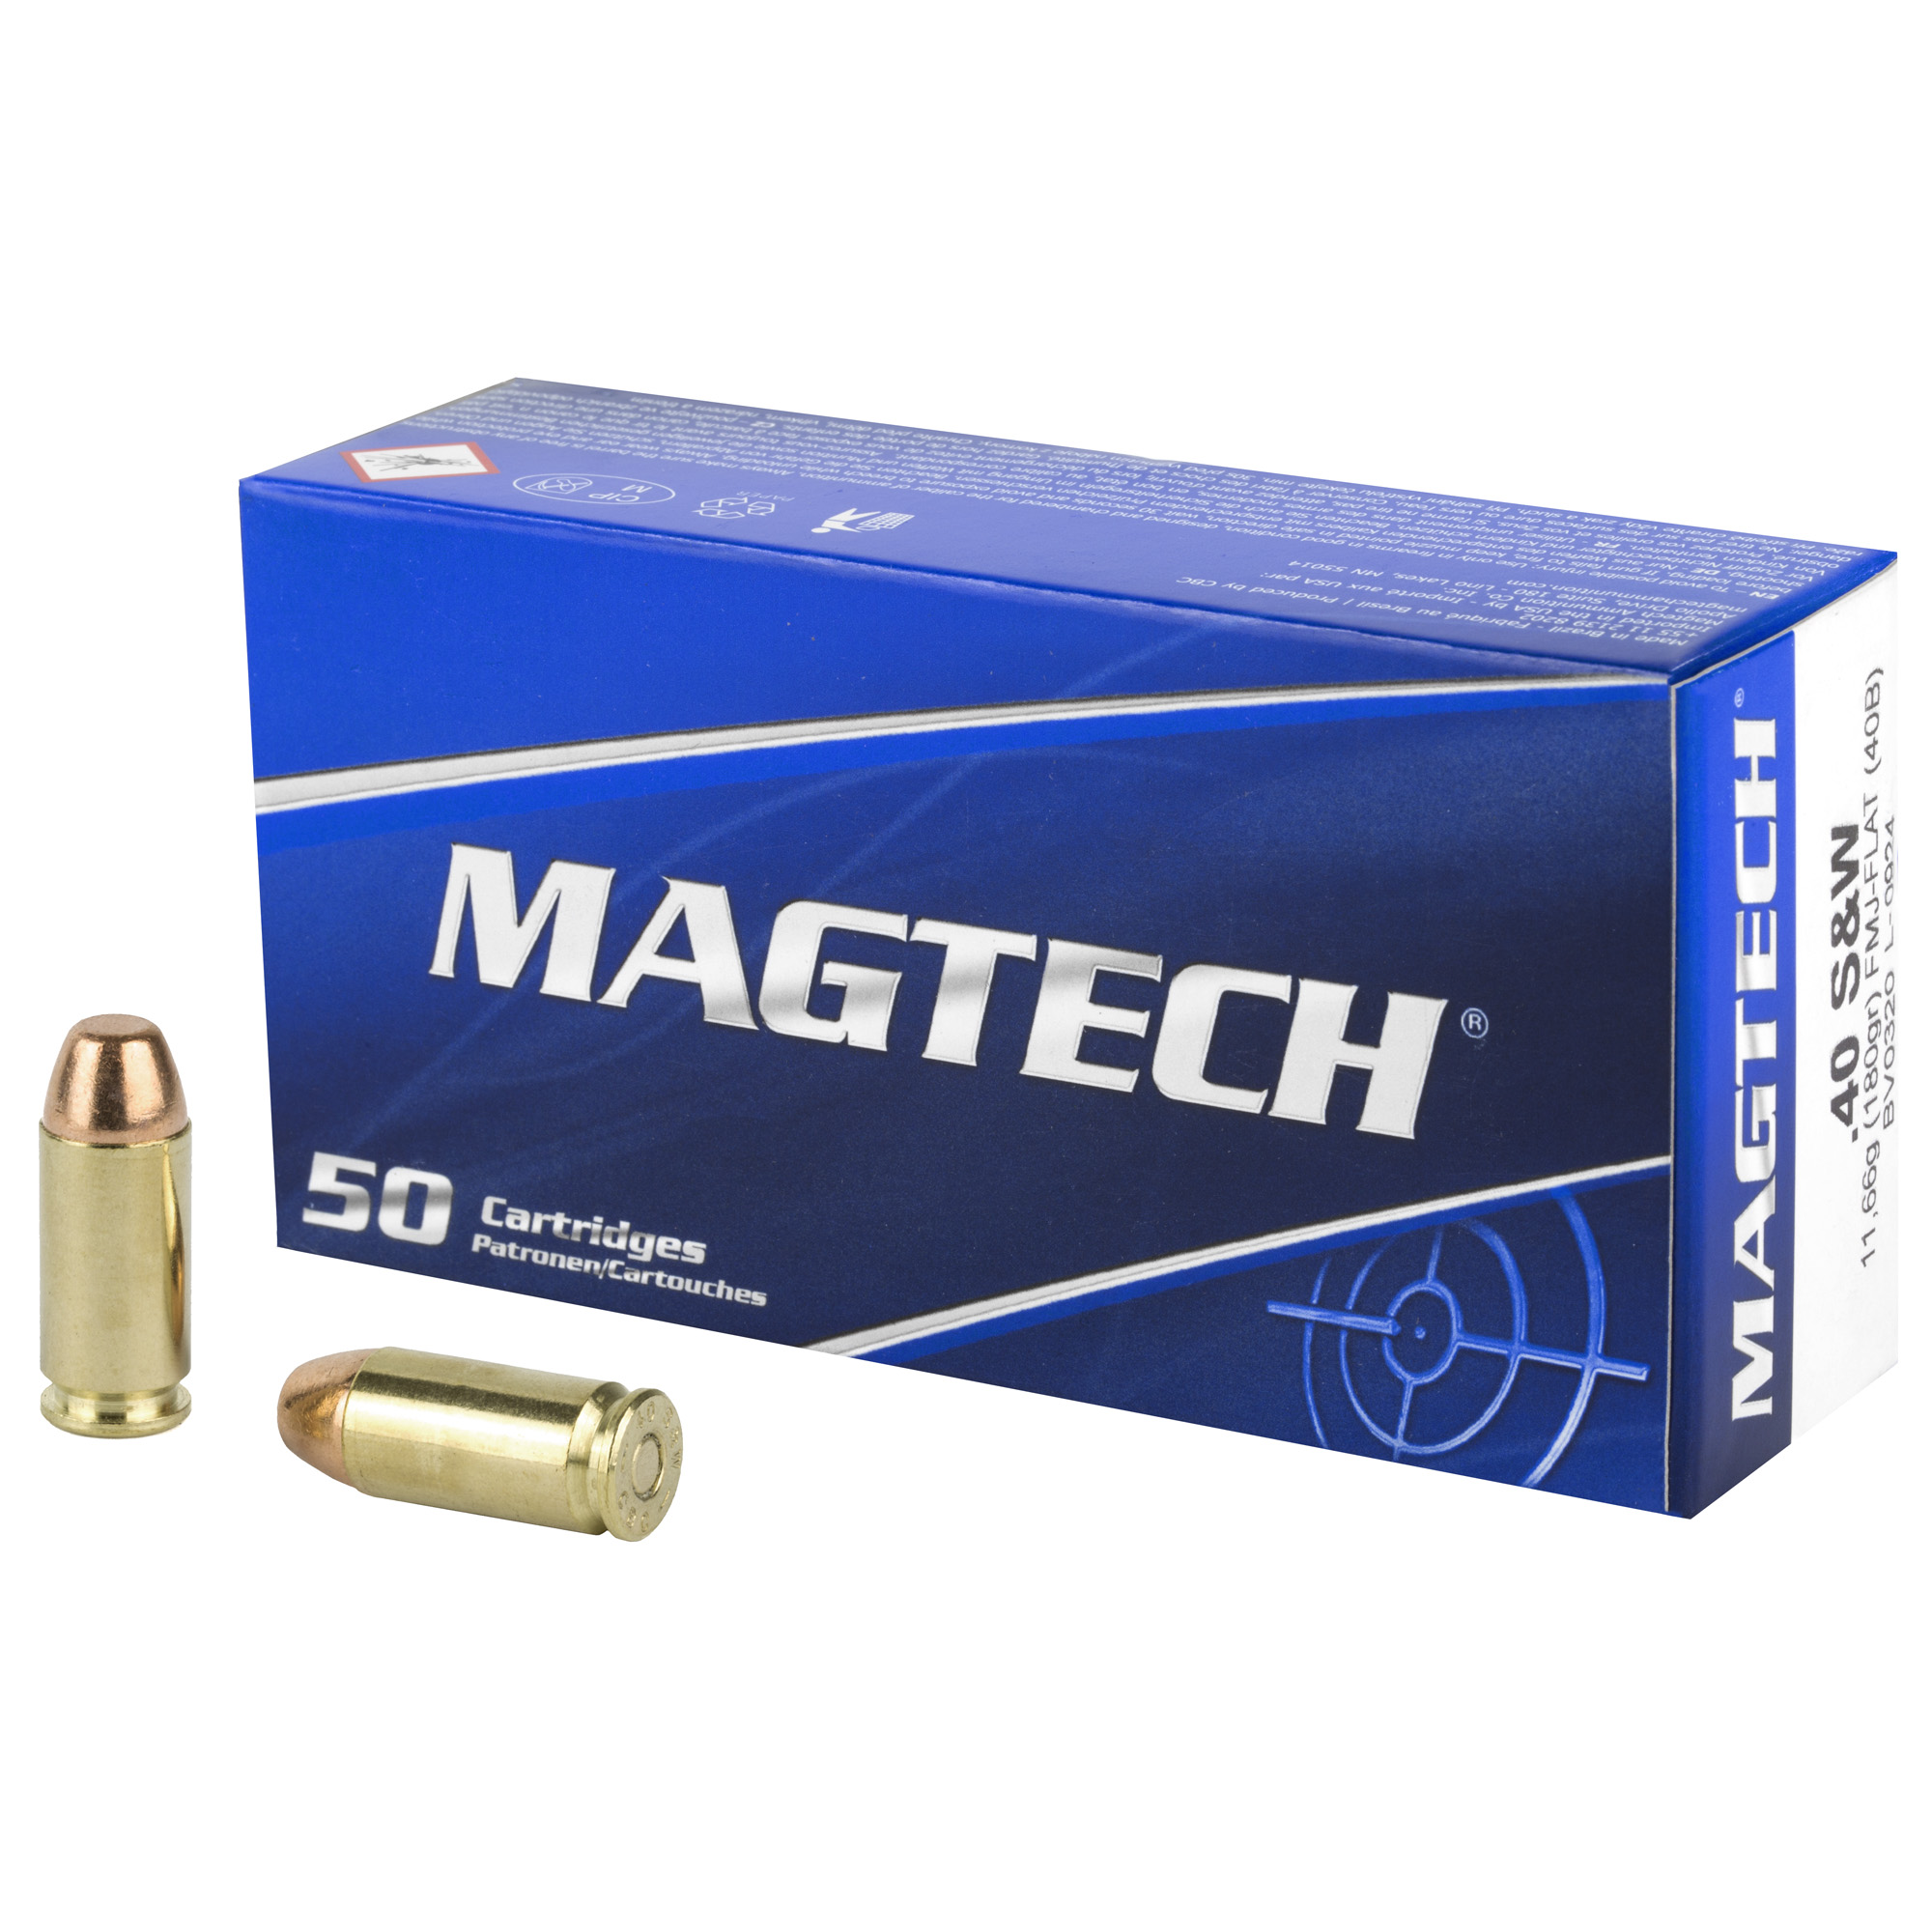 Magtech, Sport Shooting, 40S&W, 180 Grain, Full Metal Case, 50 Round Box